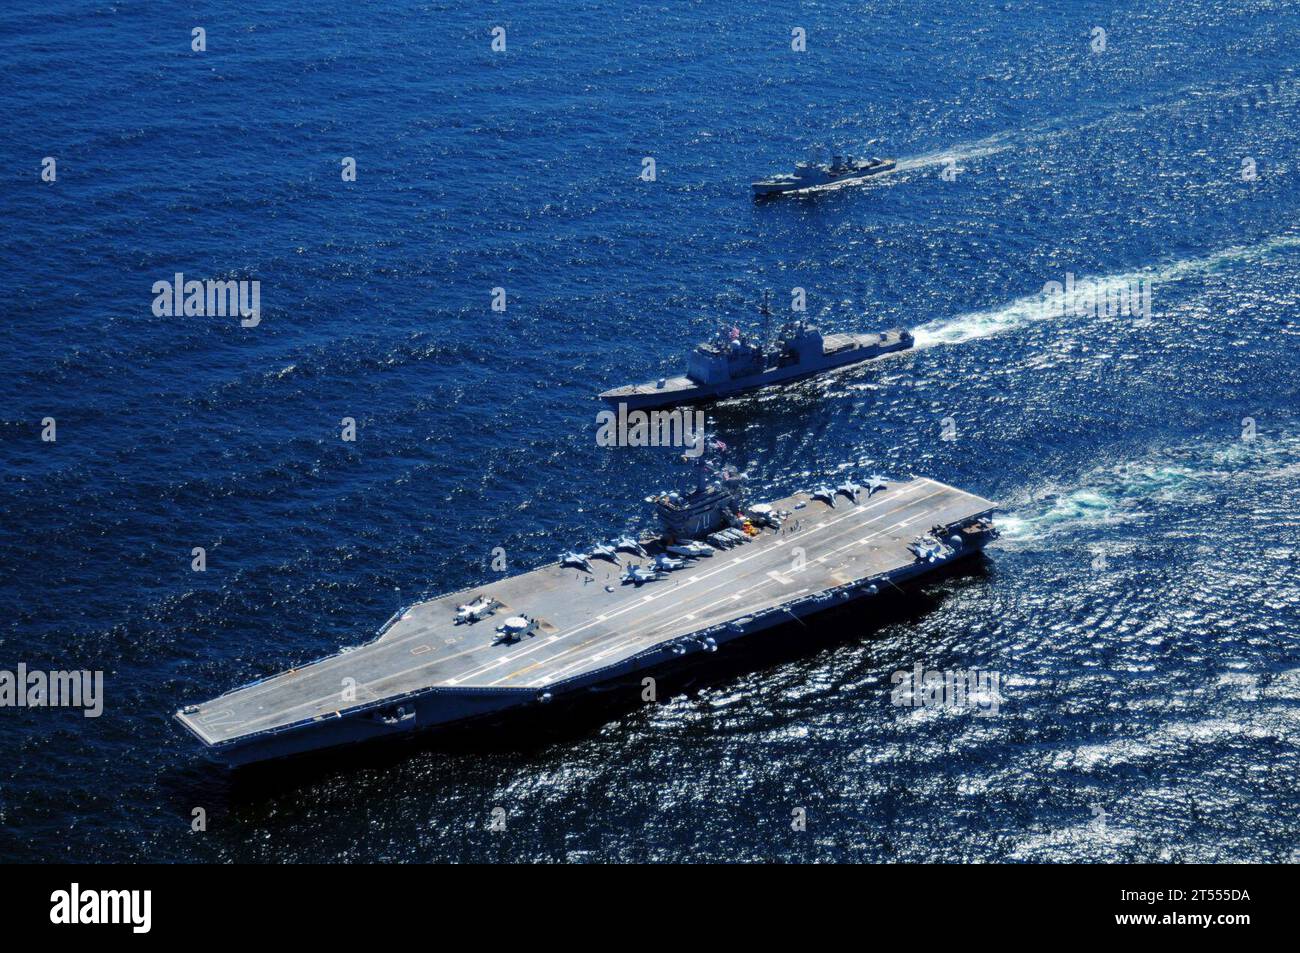 Militares extranjeros, marina, buques, mares del sur 2010, Marina de los EE.UU., Uruguay (ROU 1), USS Bunker Hill (CG 52), USS Carl Vinson (CVN 70) Foto de stock